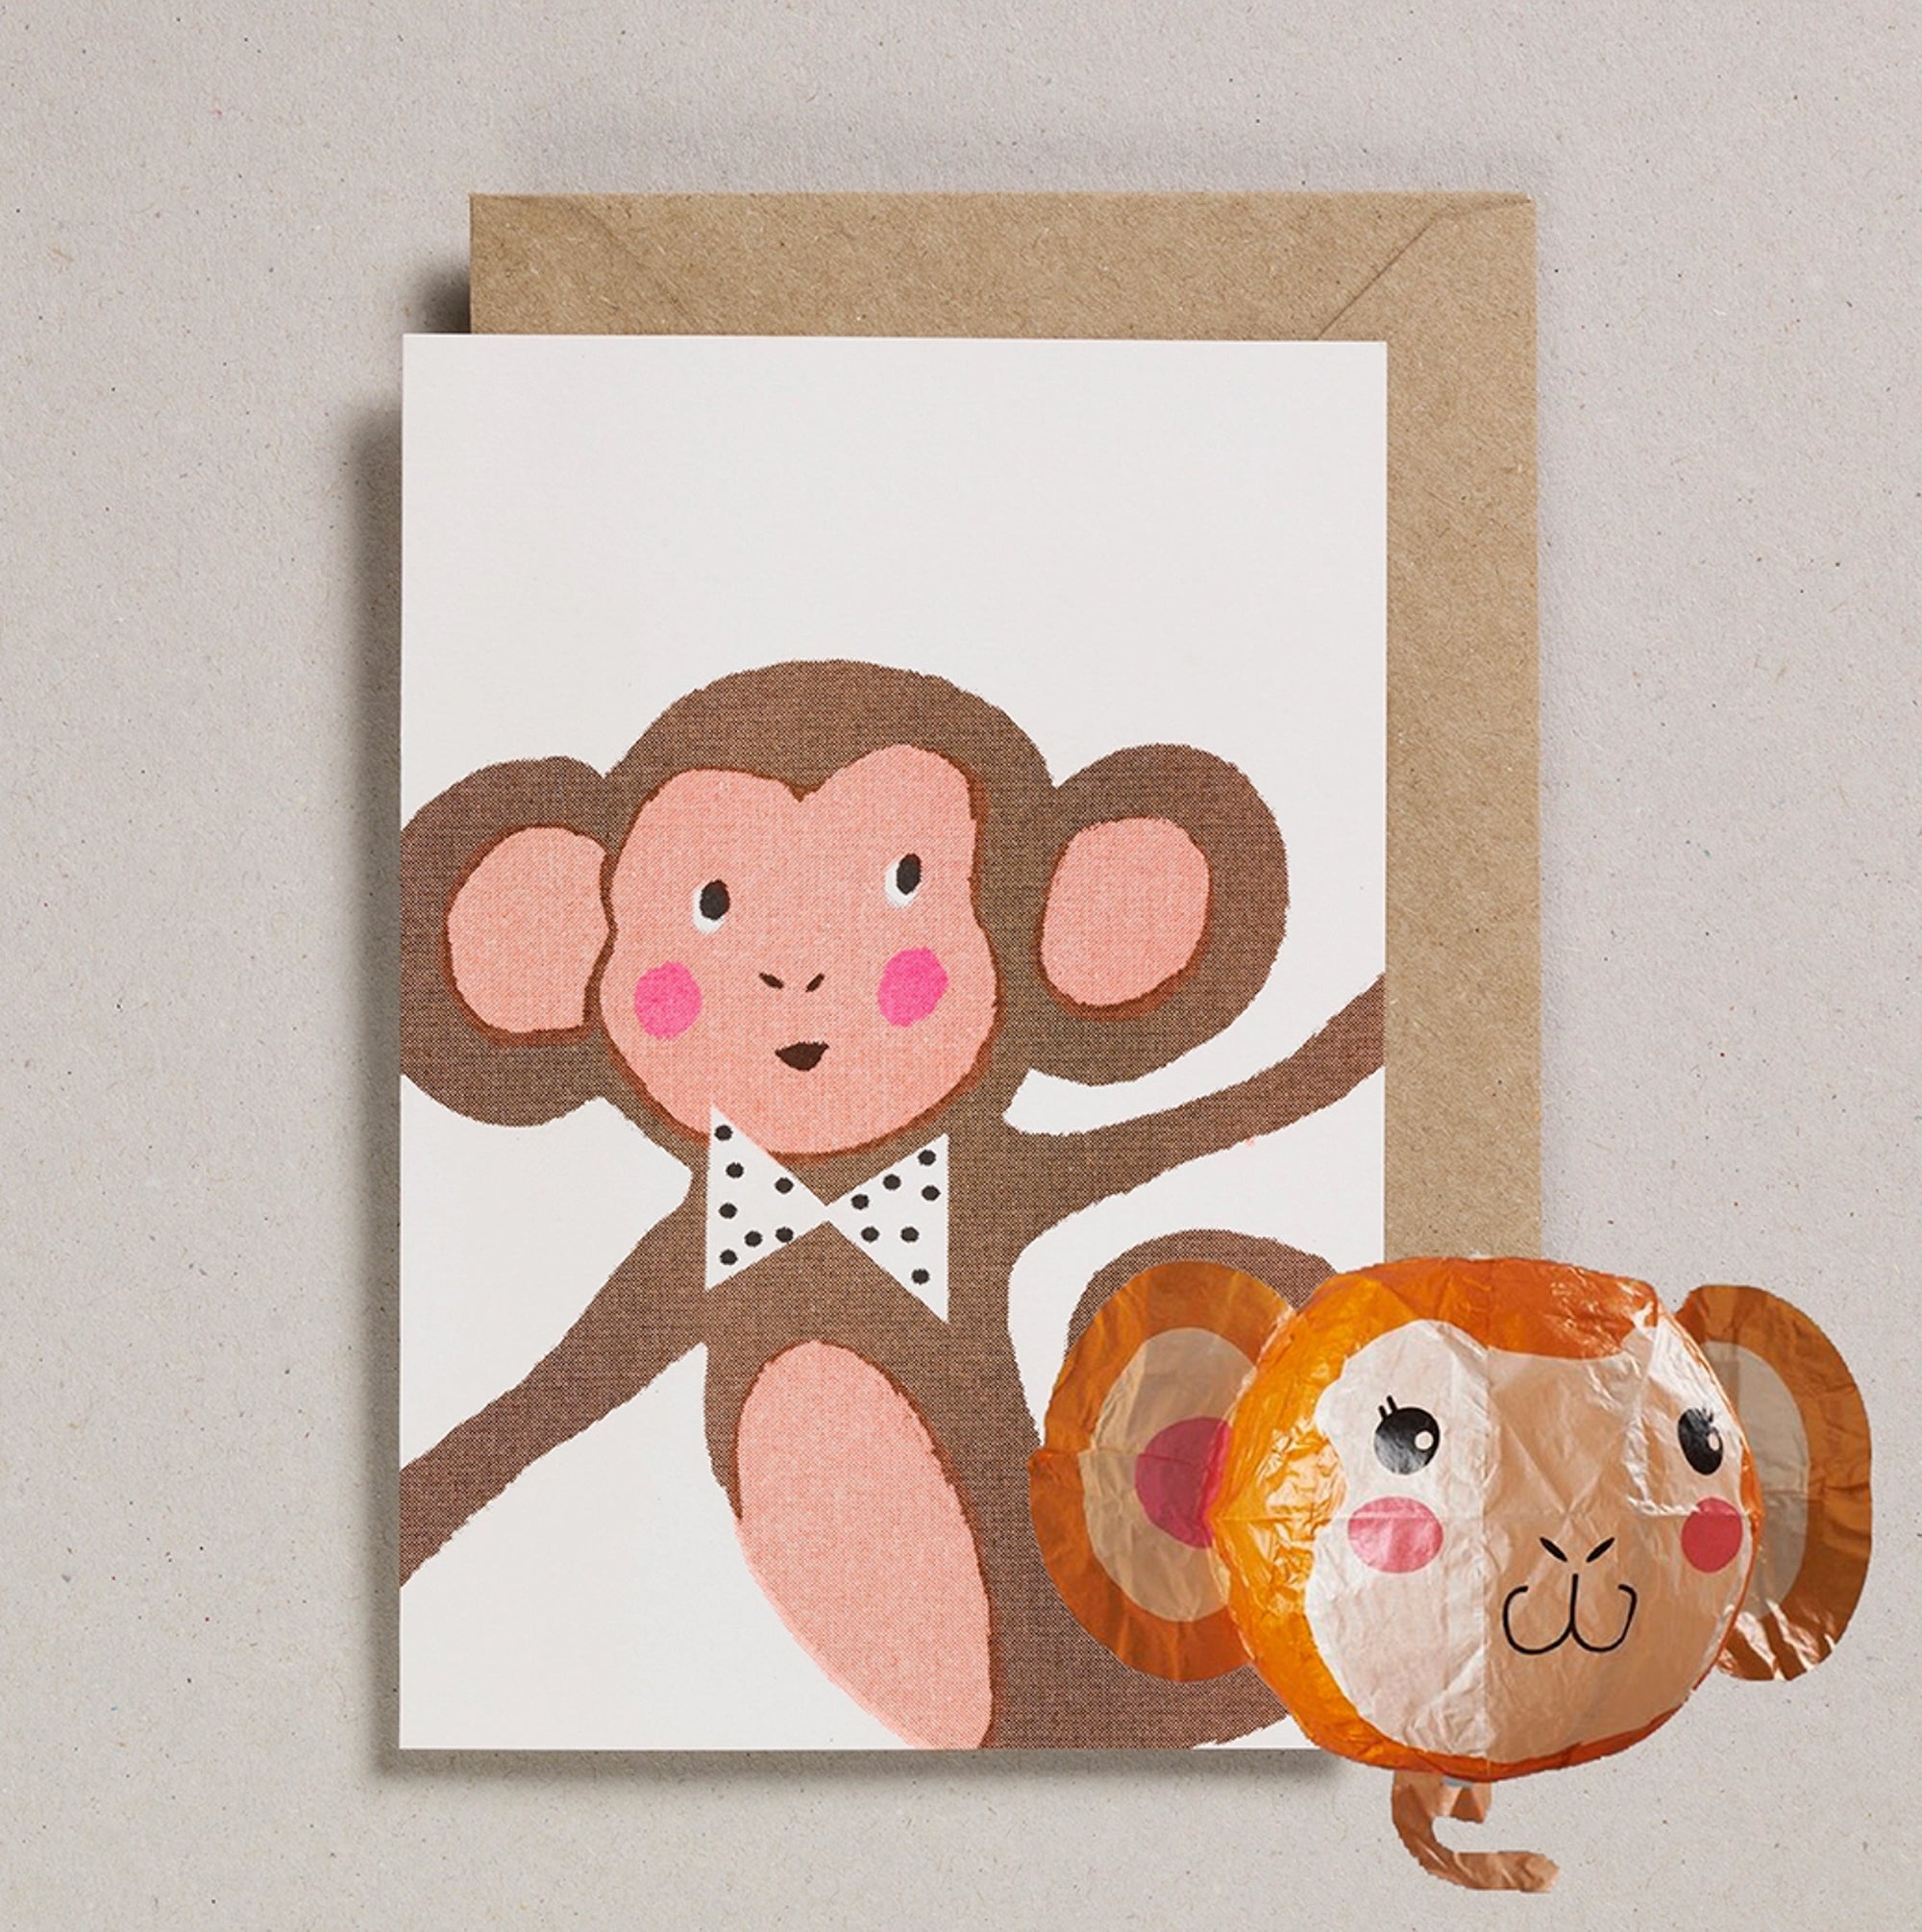 Monkey paper balloon card